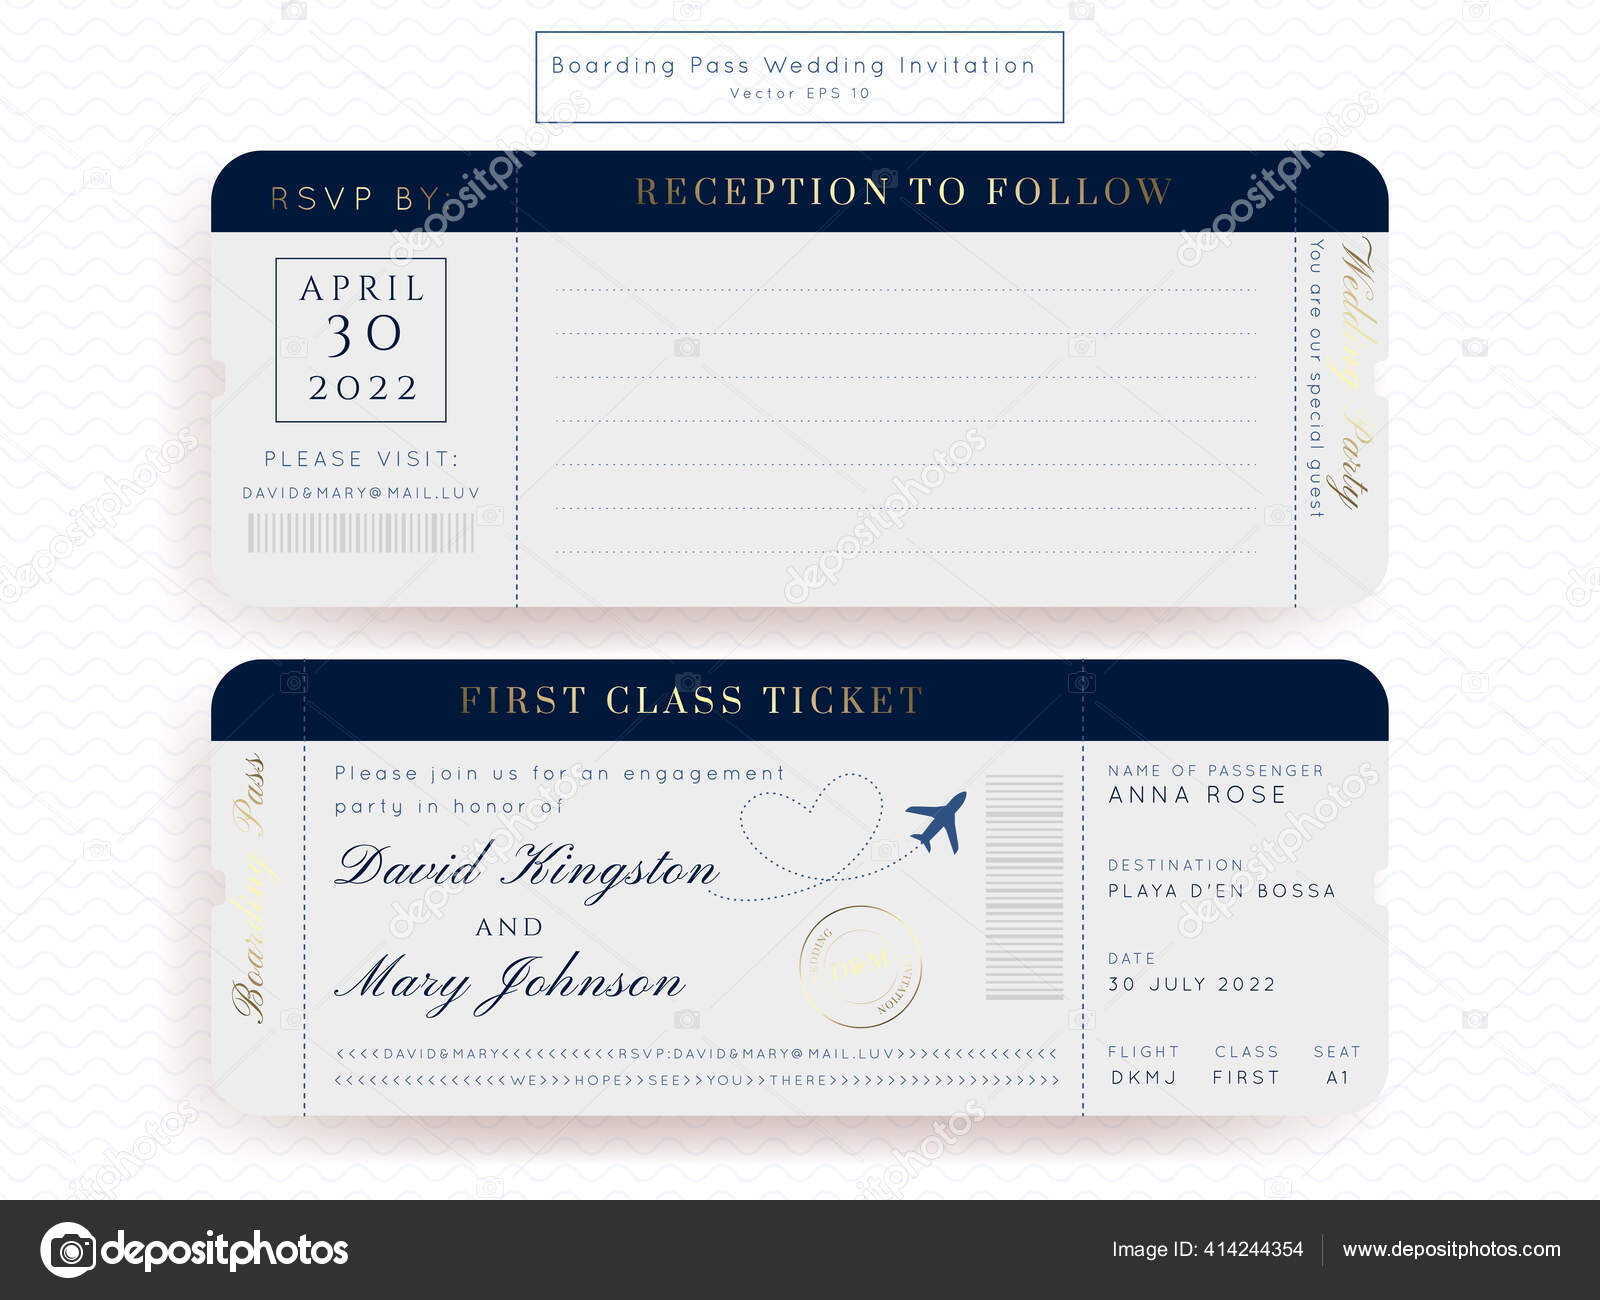 Travel Theme Boarding Passes Boarding Pass Wedding Invitations Airplane Ticket Destination Wedding Plane Ticket Passport